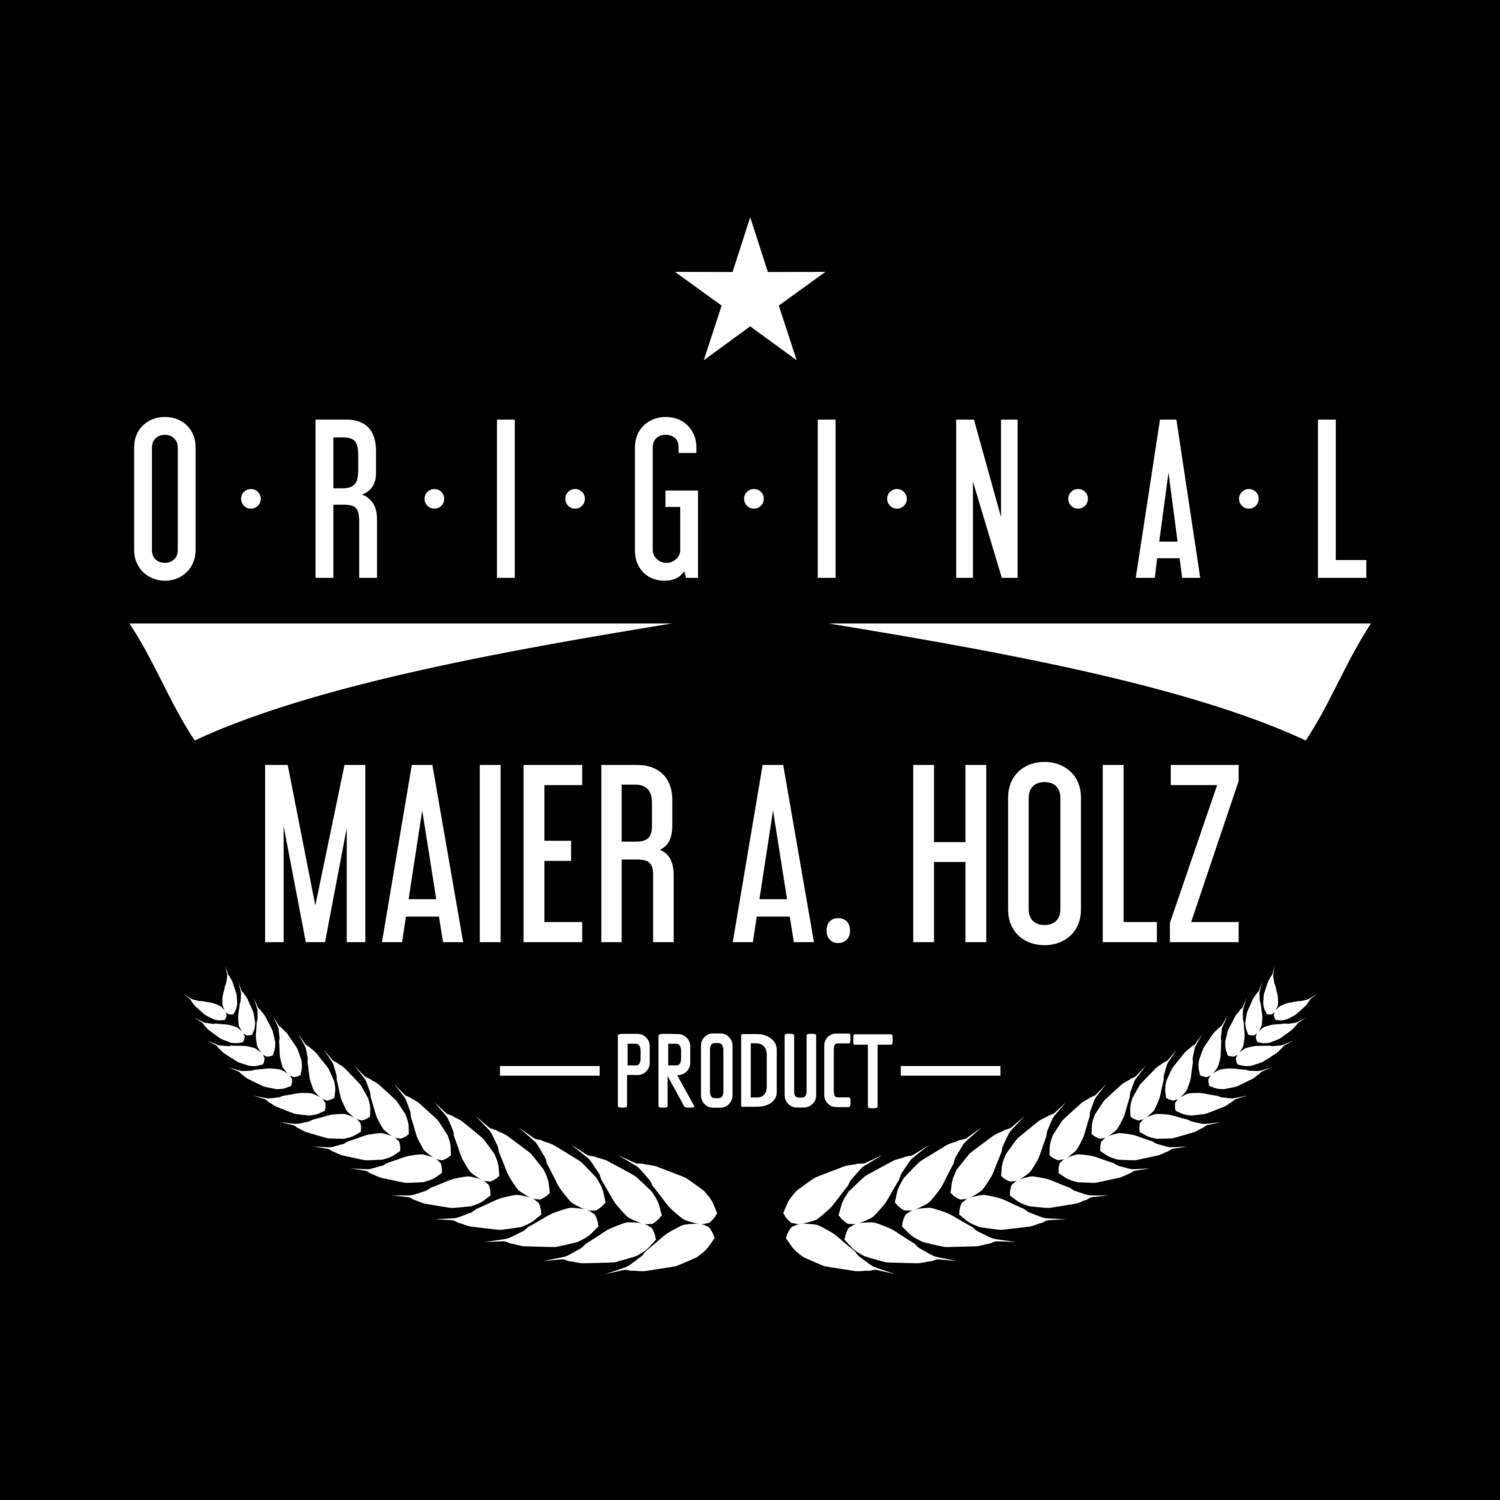 Maier a. Holz T-Shirt »Original Product«